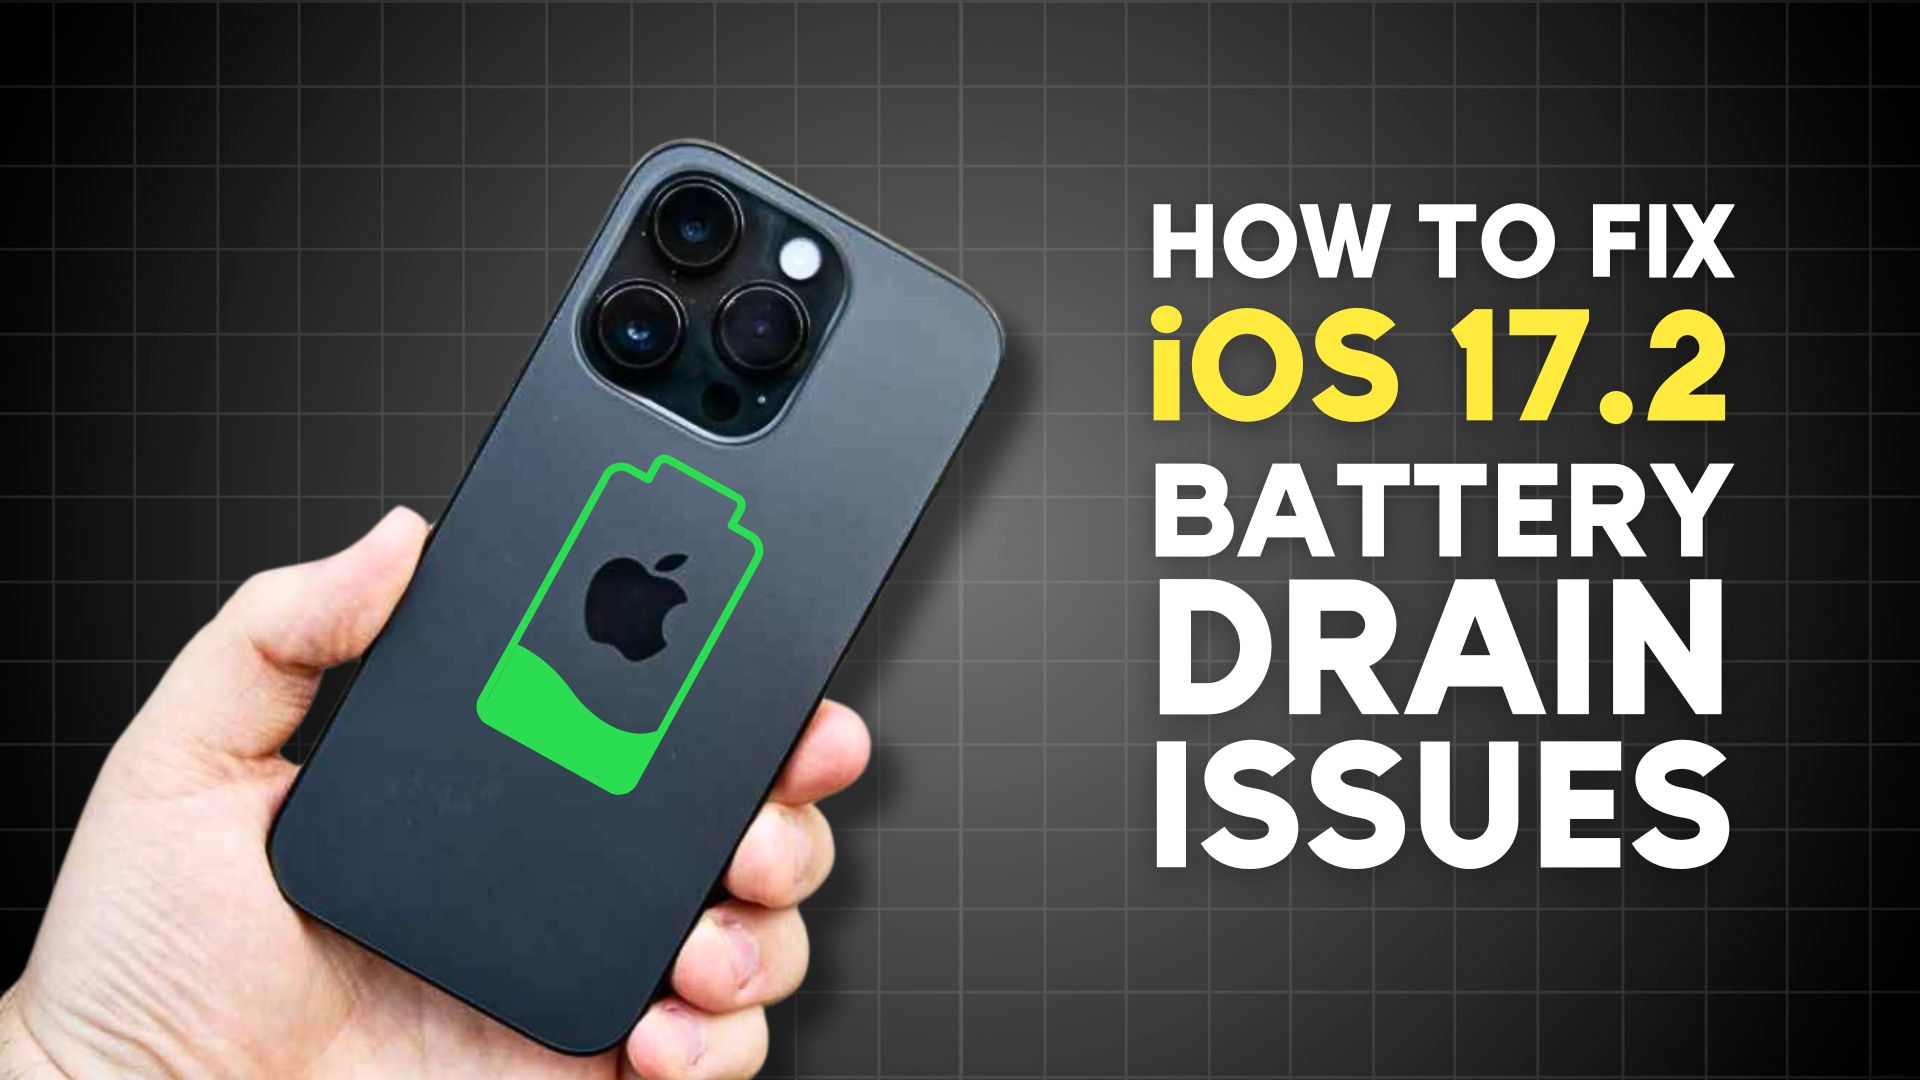 iOS 17.2 Battery Drain Issues